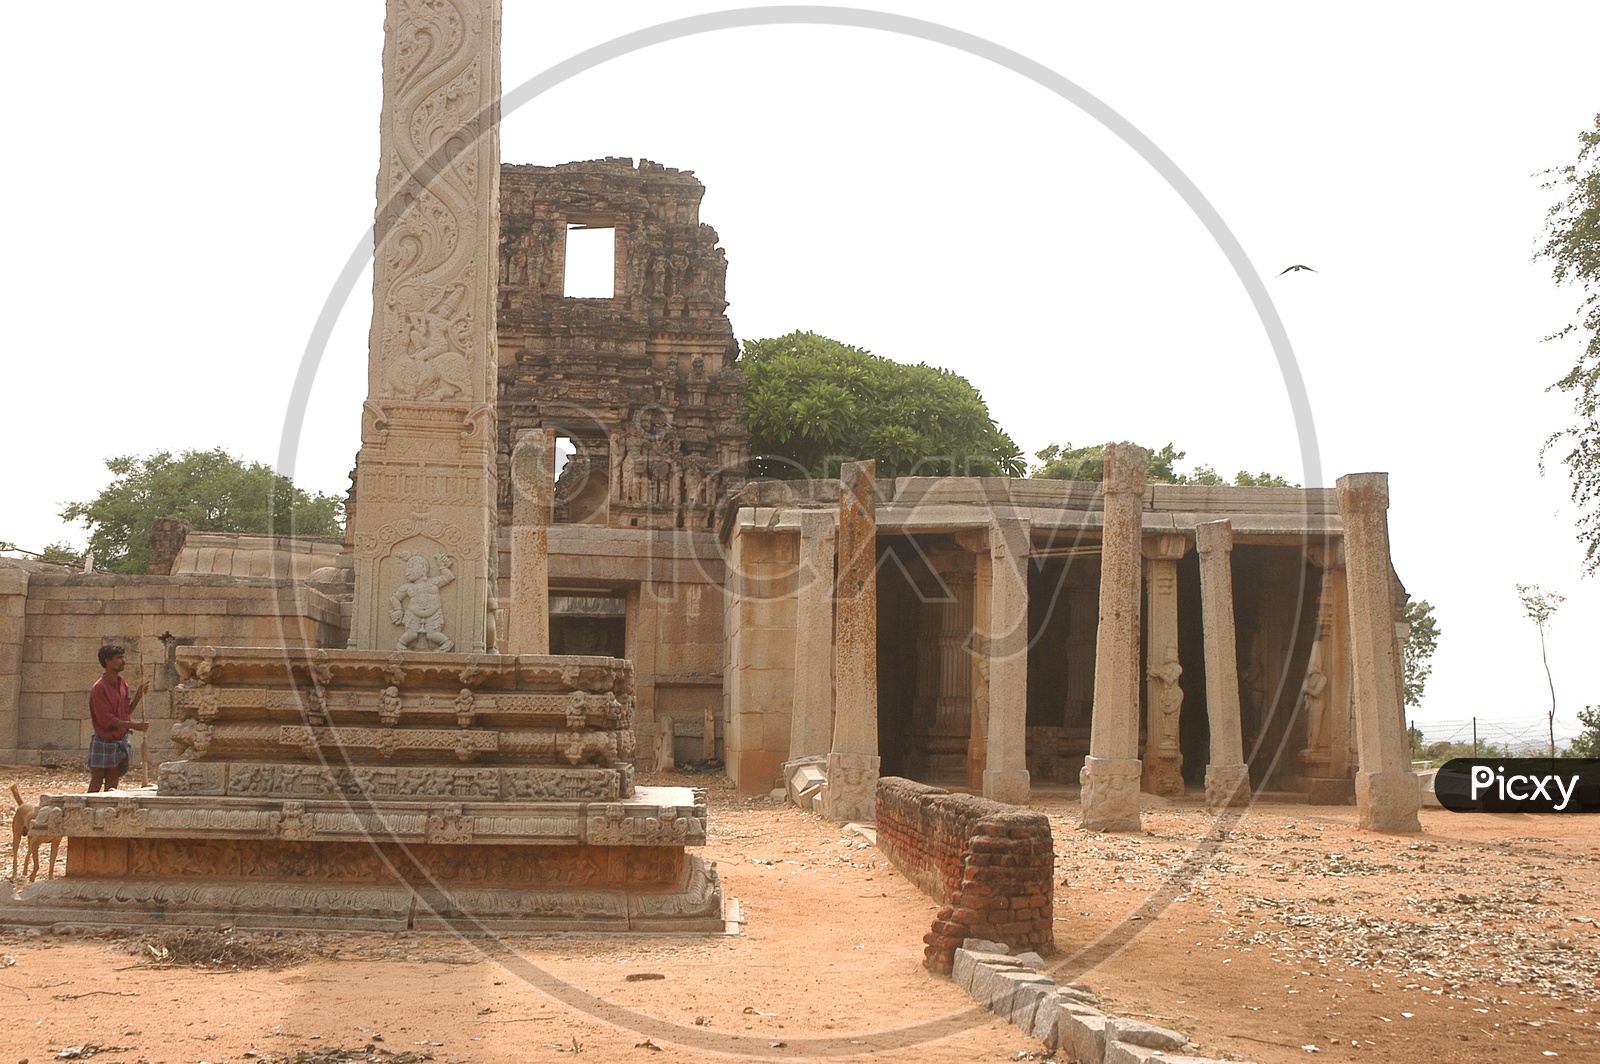 Ancient temple ruins alongside the stone pillars